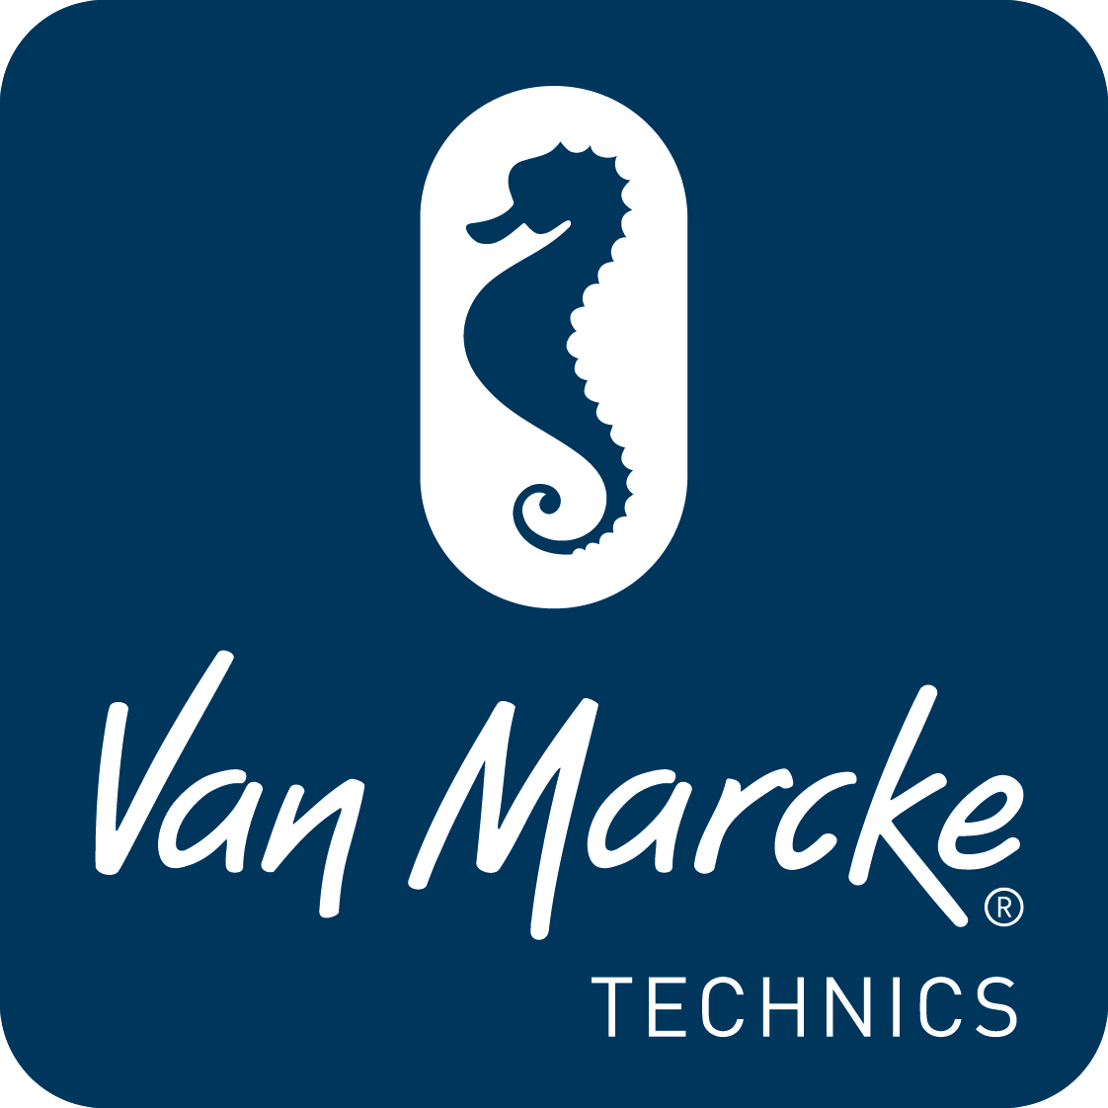 Van Marcke lance son développement en franchise en France.